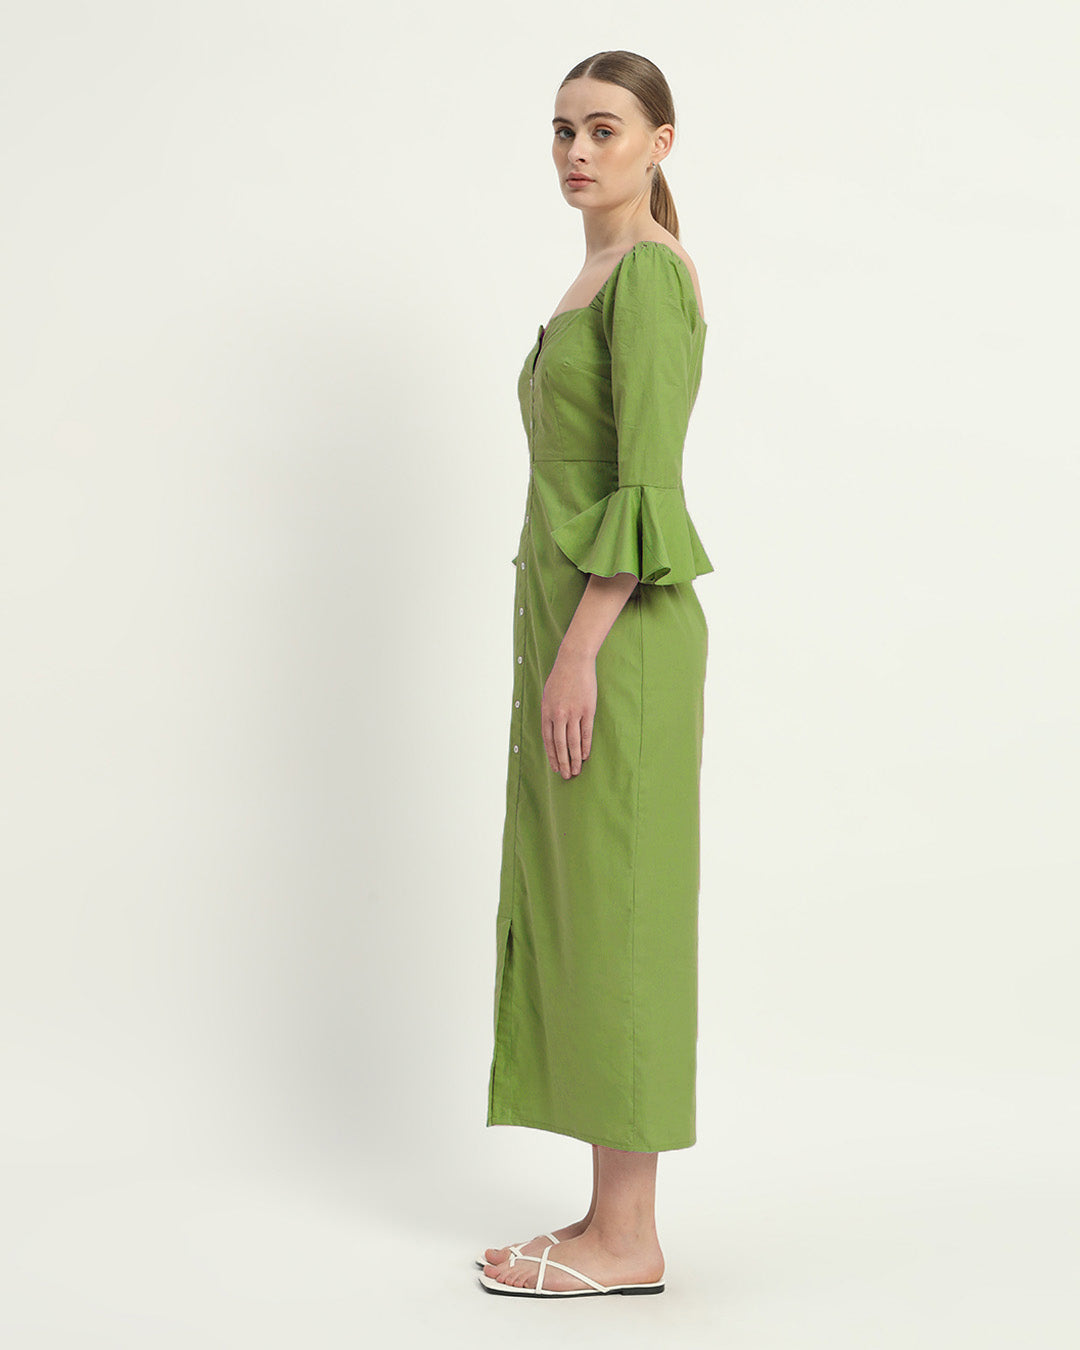 The Rosendale Fern Cotton Dress